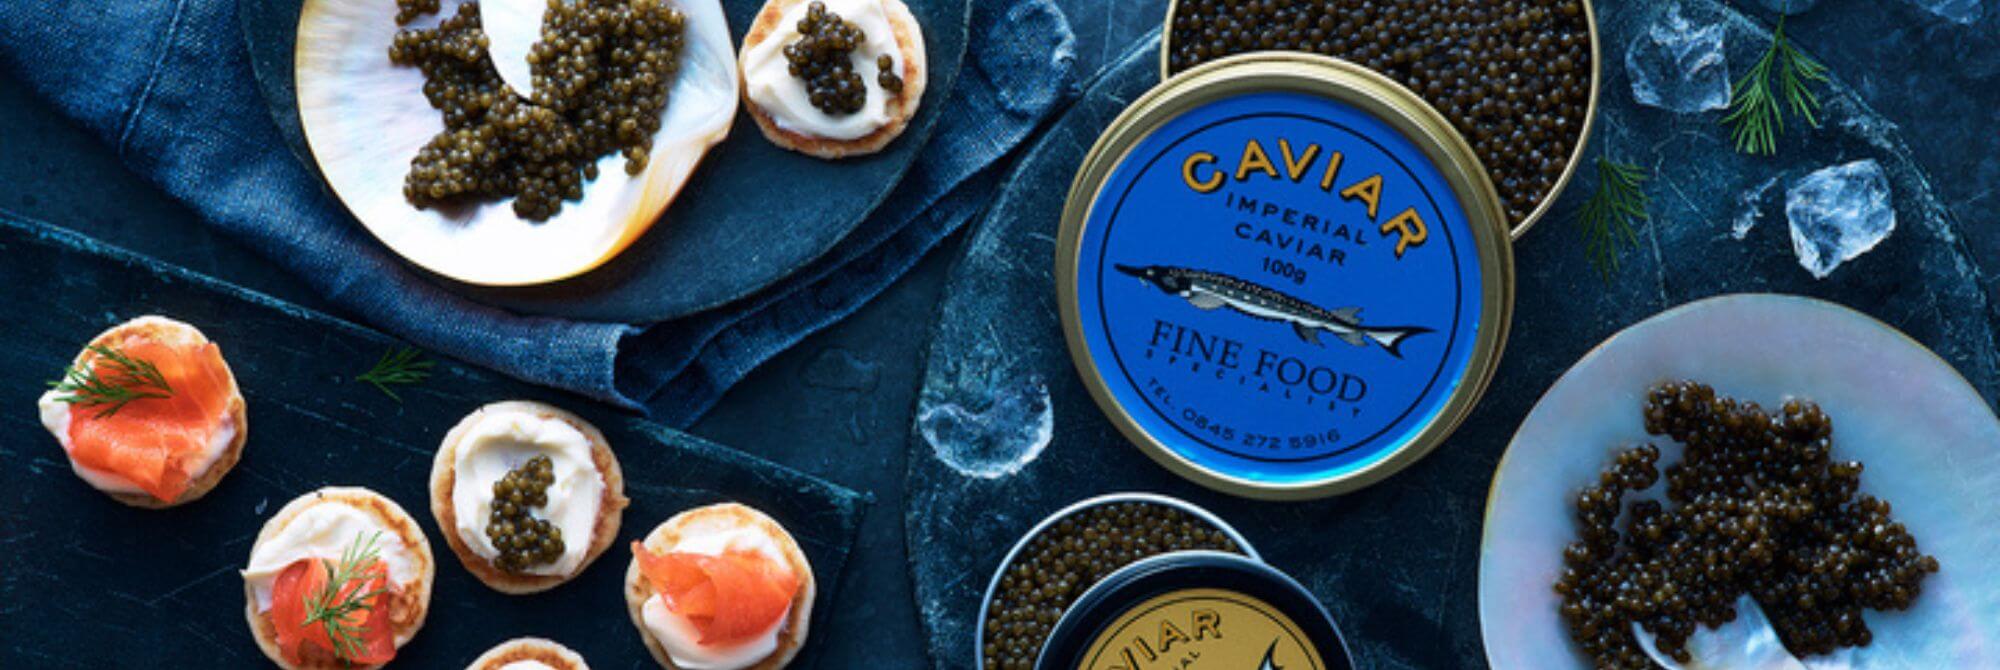 Caviar Hampers